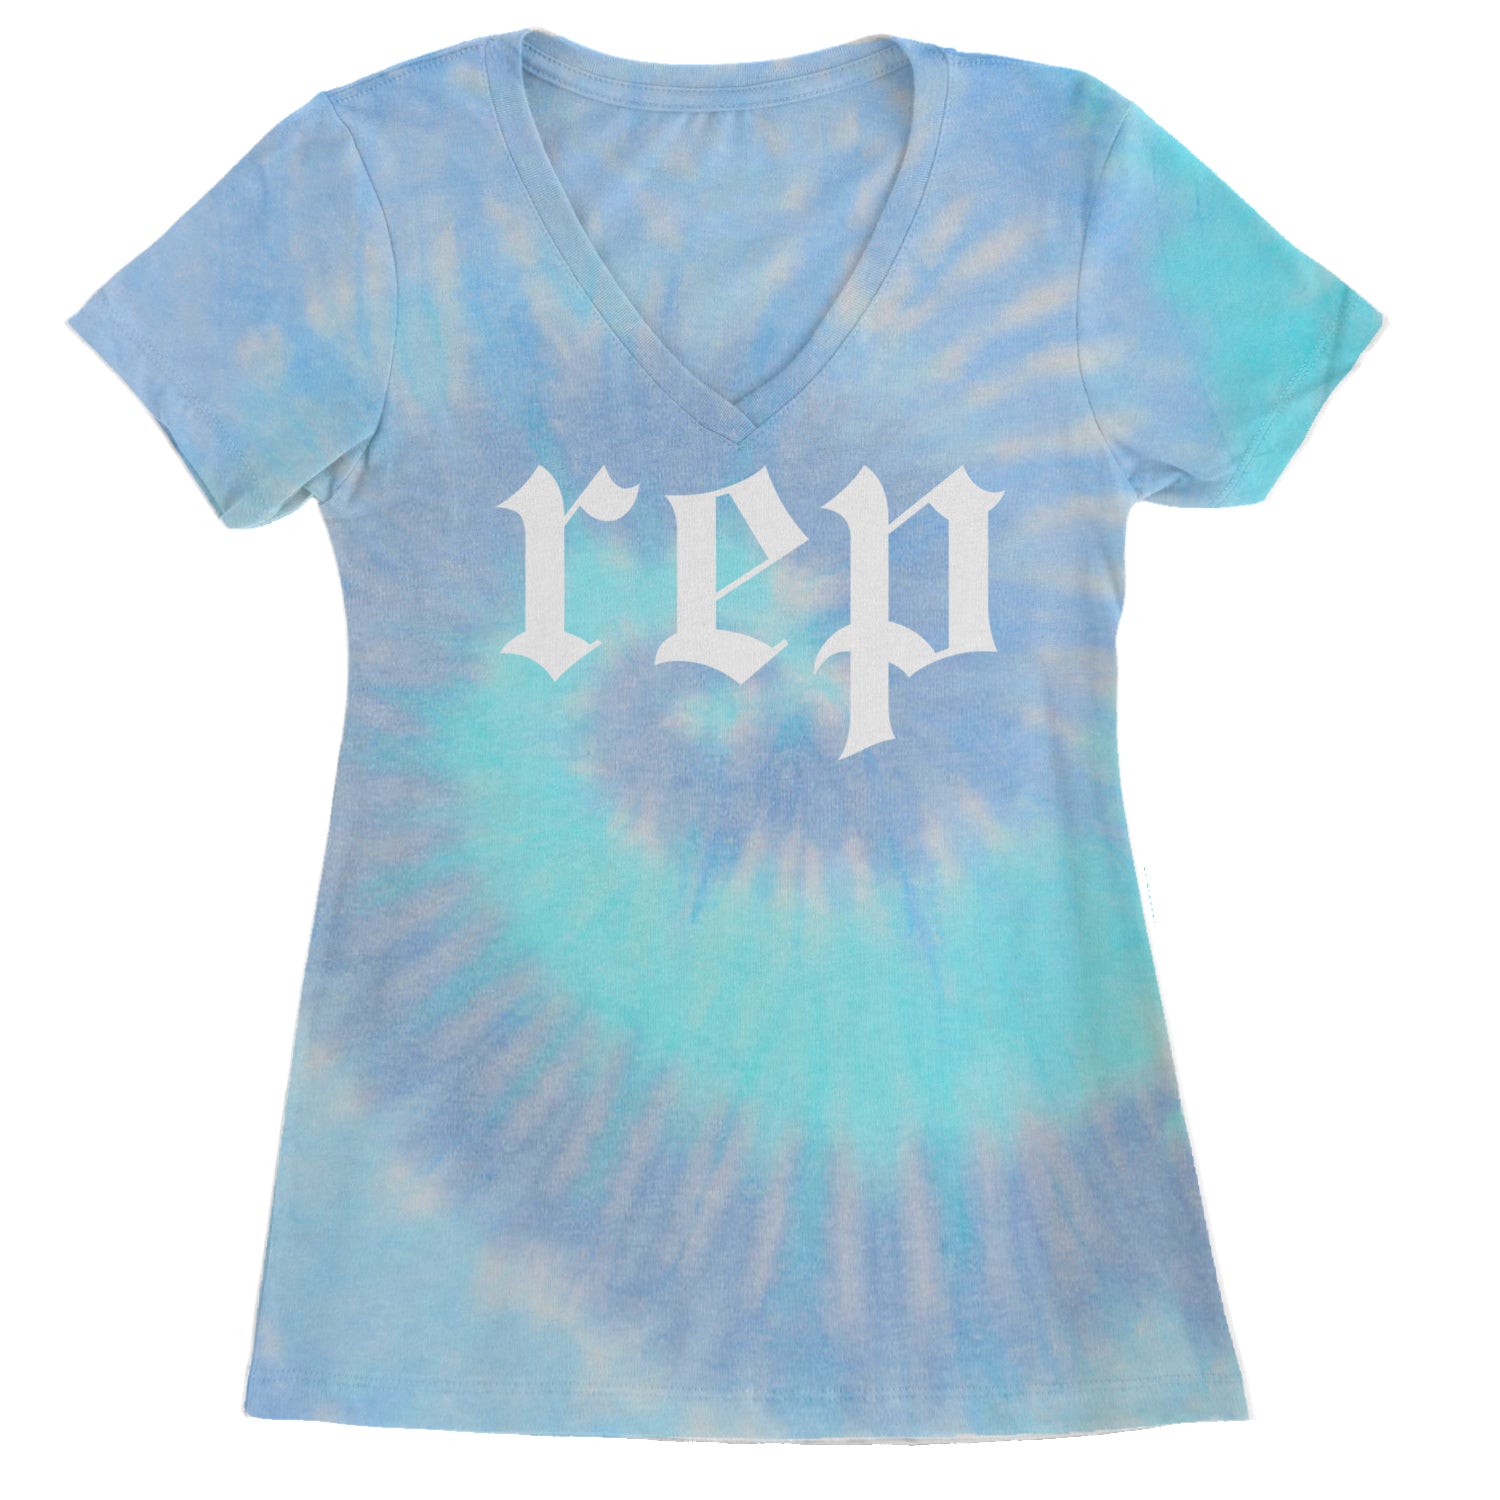 REP Reputation Eras Music Lover Gift Fan Favorite Ladies V-Neck T-shirt Blue Clouds